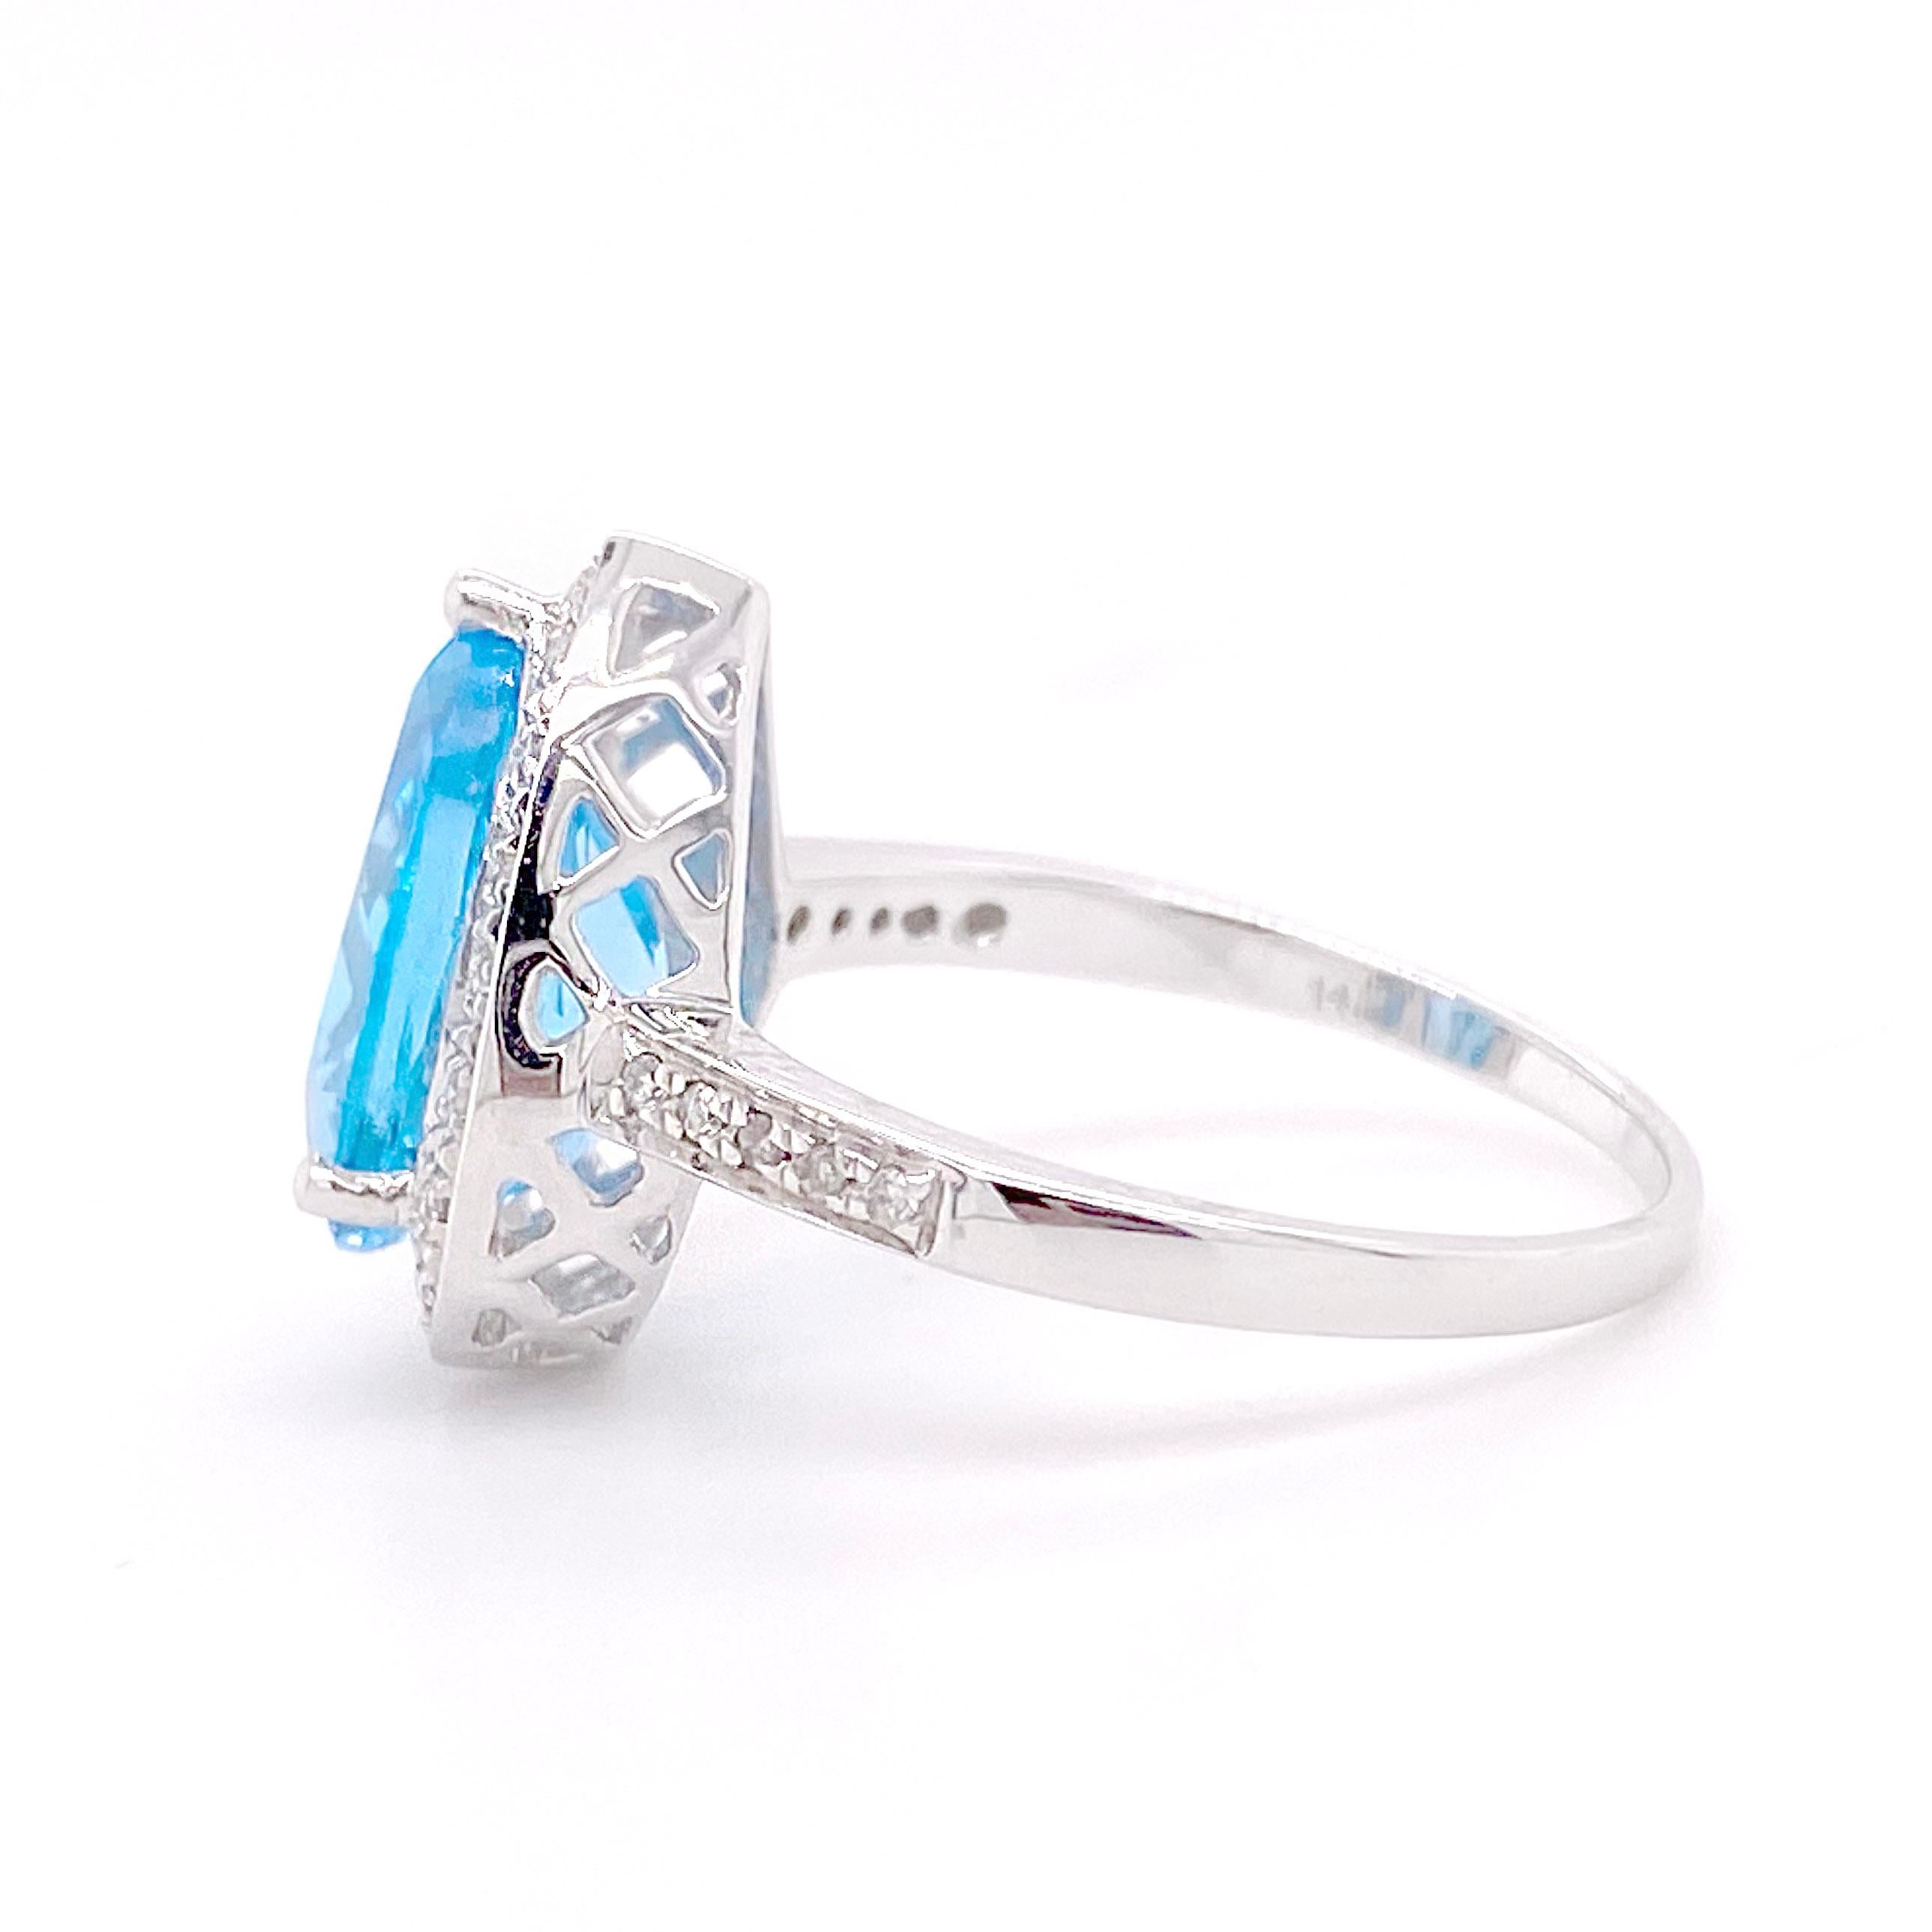 4 carat blue topaz ring